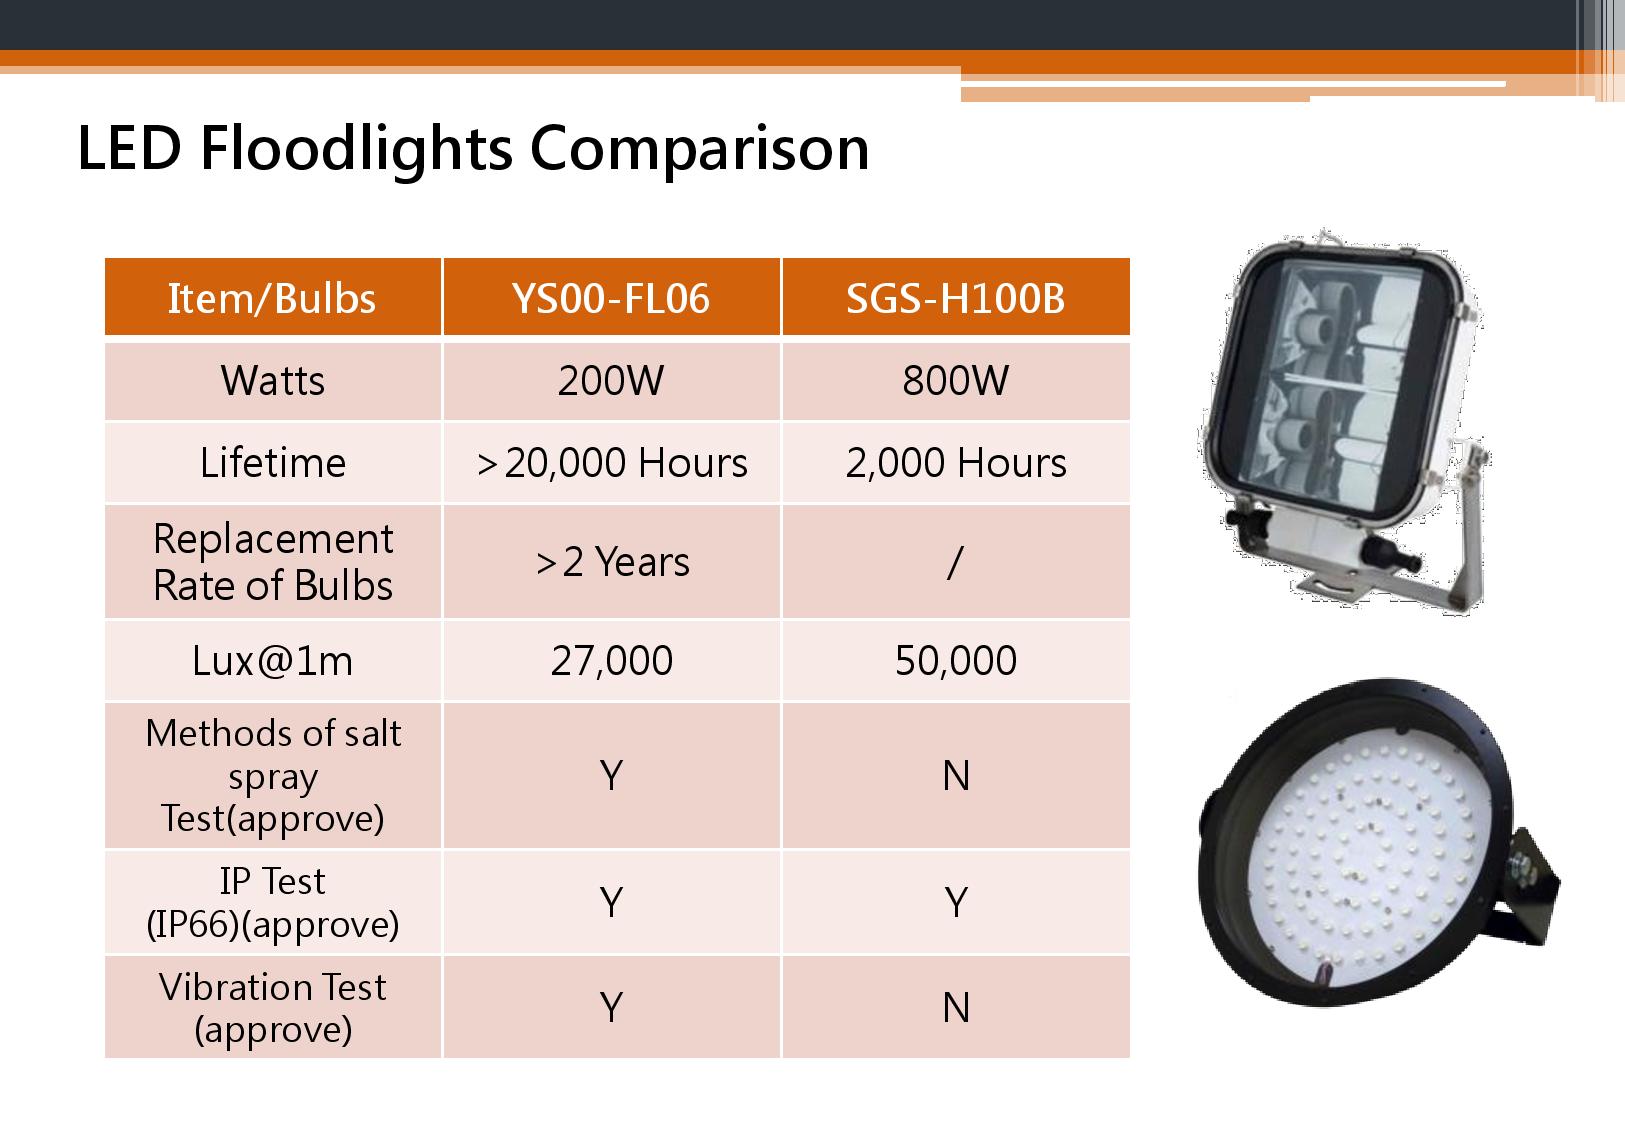 Marine LED Light  Series - Comparison